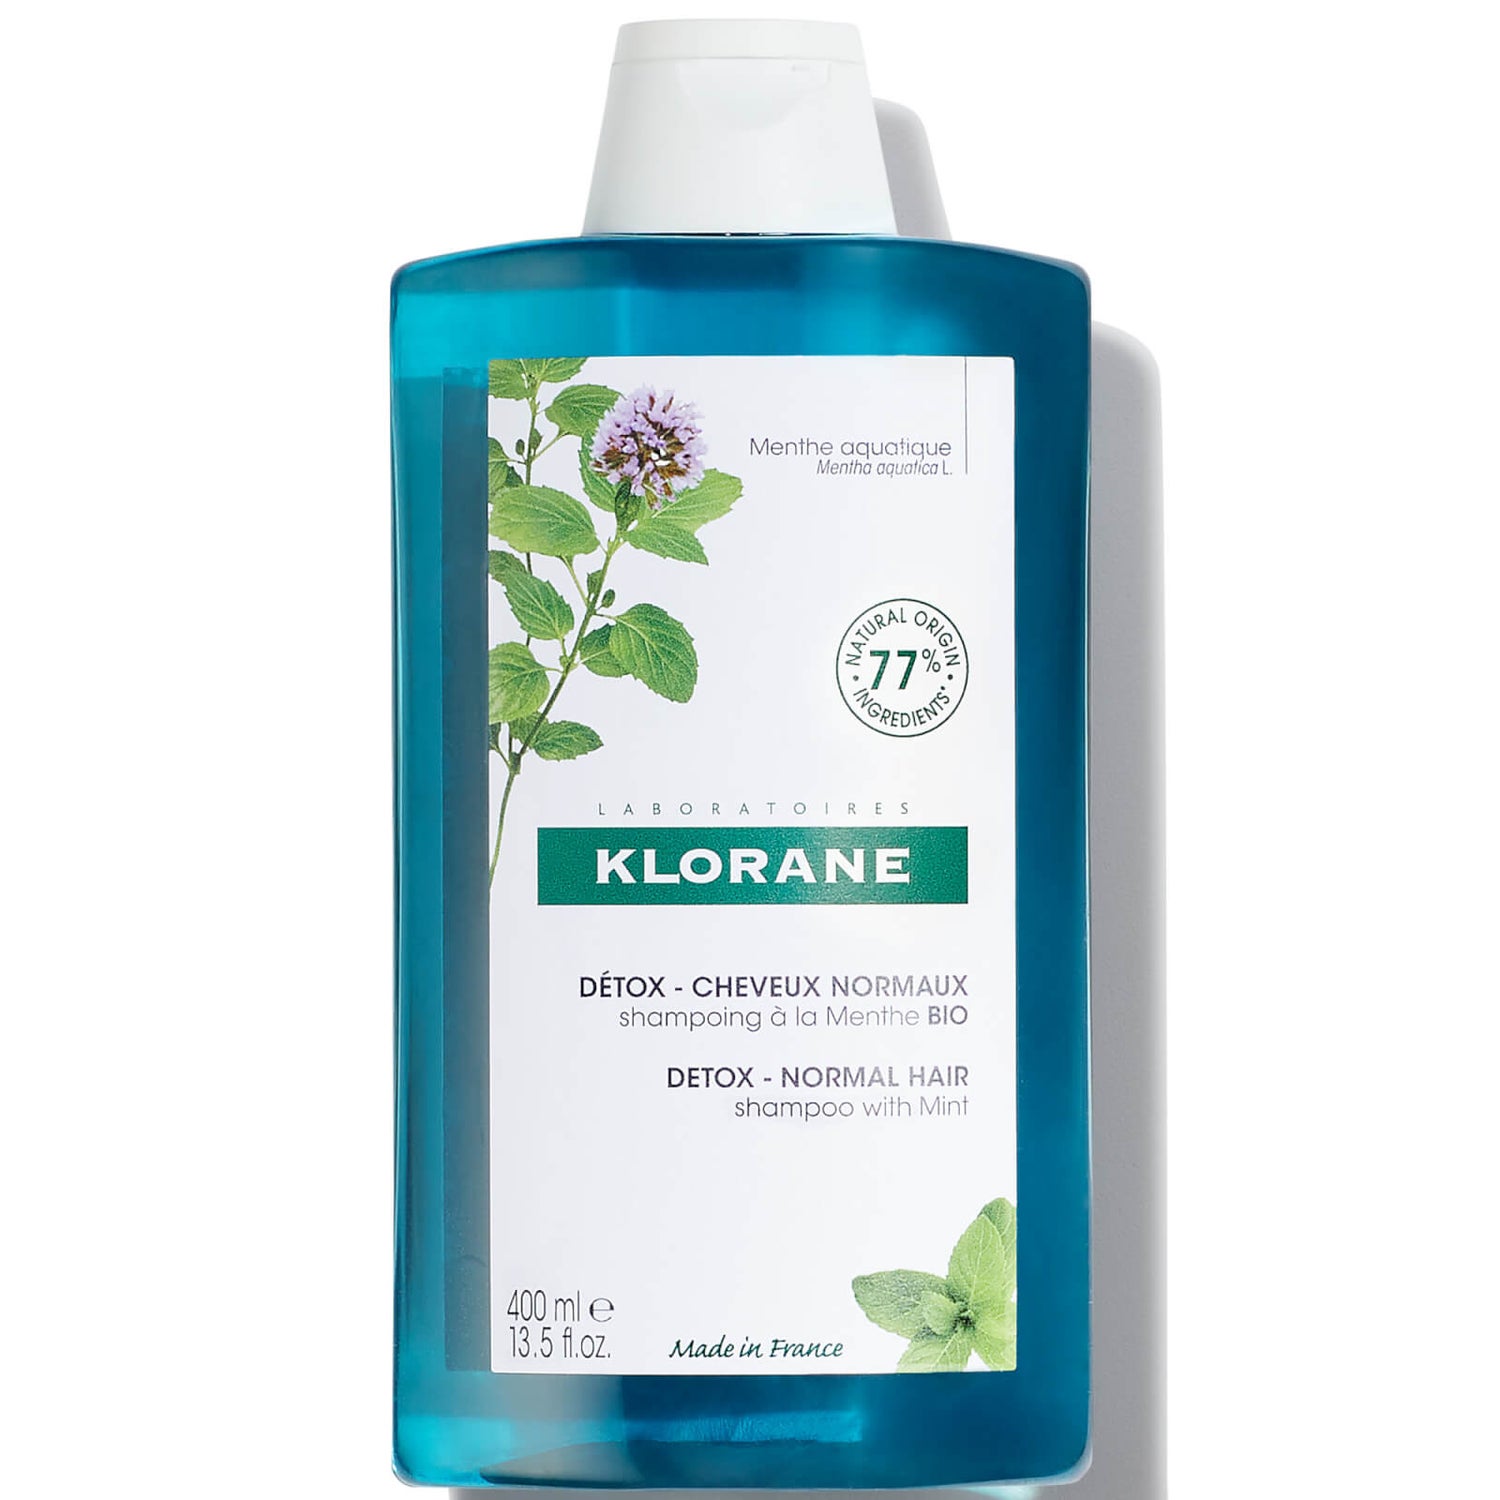 KLORANE Detox Shampoo with Aquatic Mint 400ml